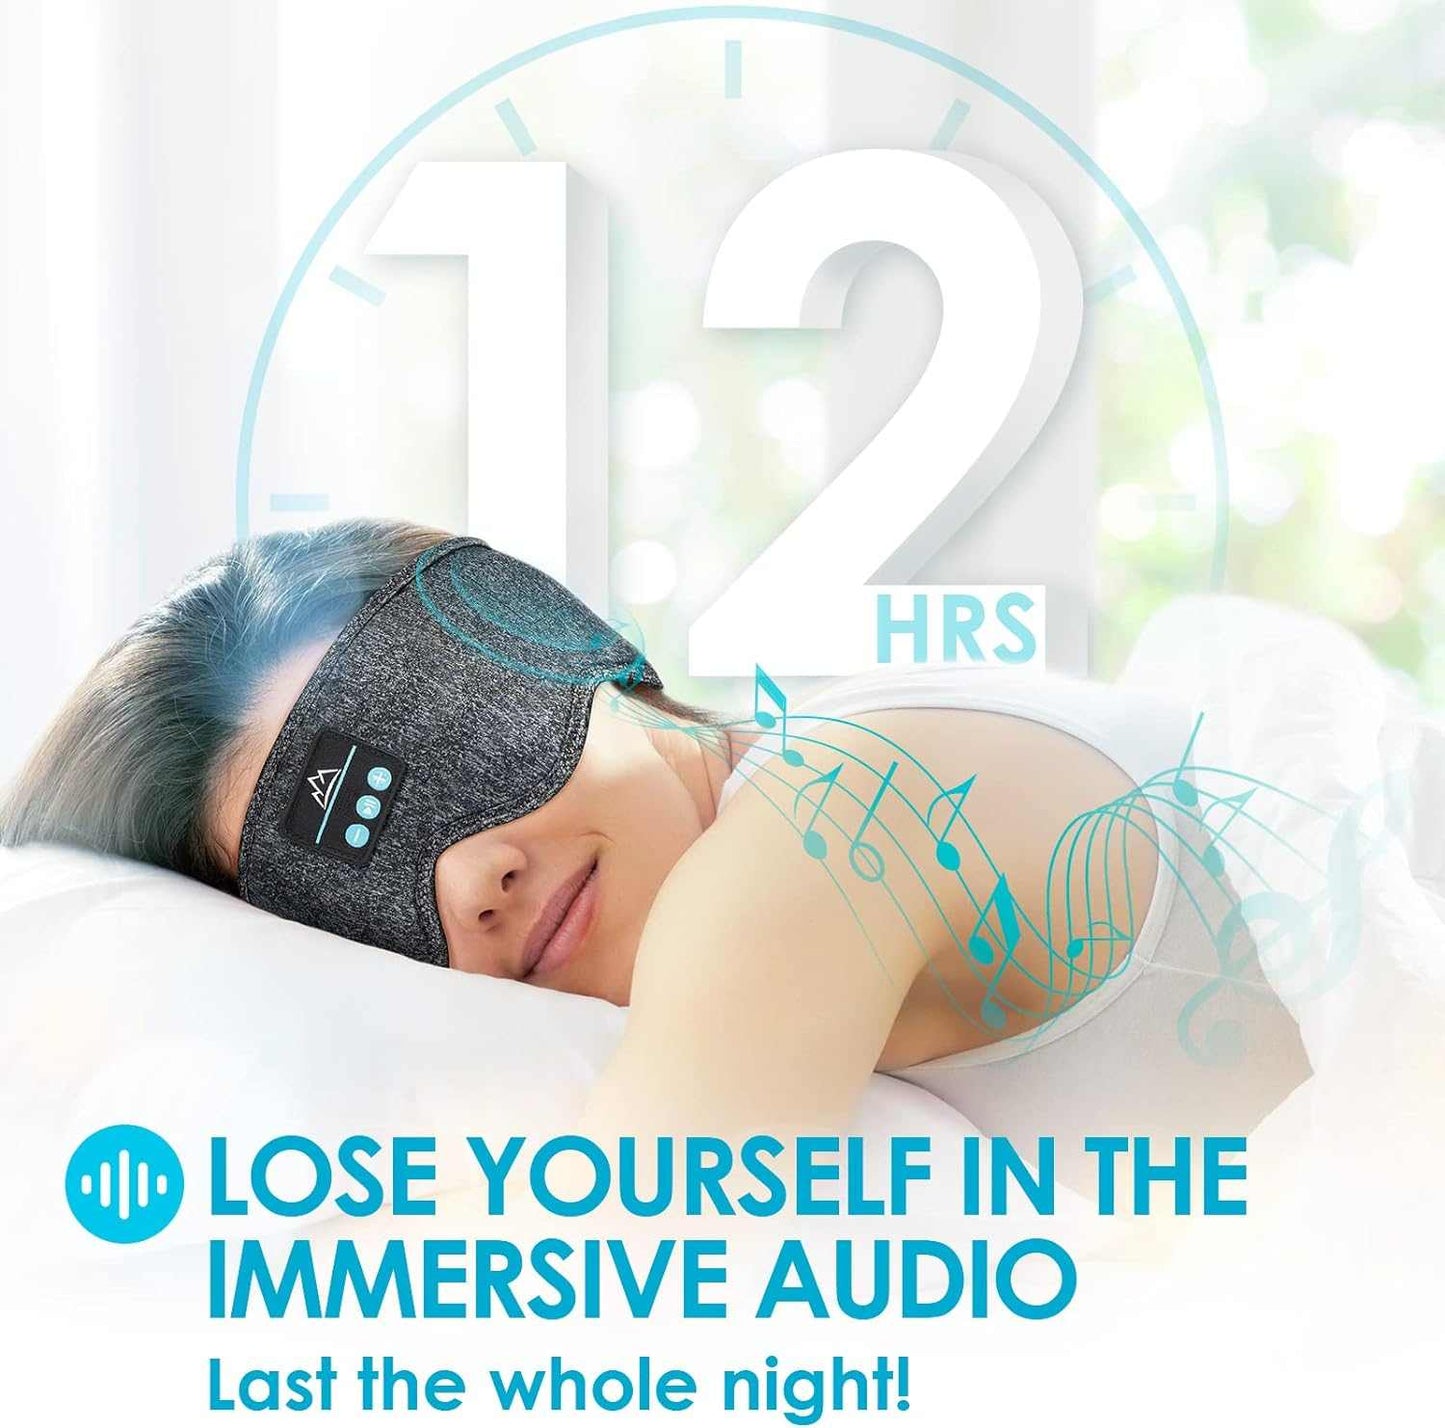 Bluetooth Sleep Headphones & Headband - Perfect for Side Sleepers & Relaxation